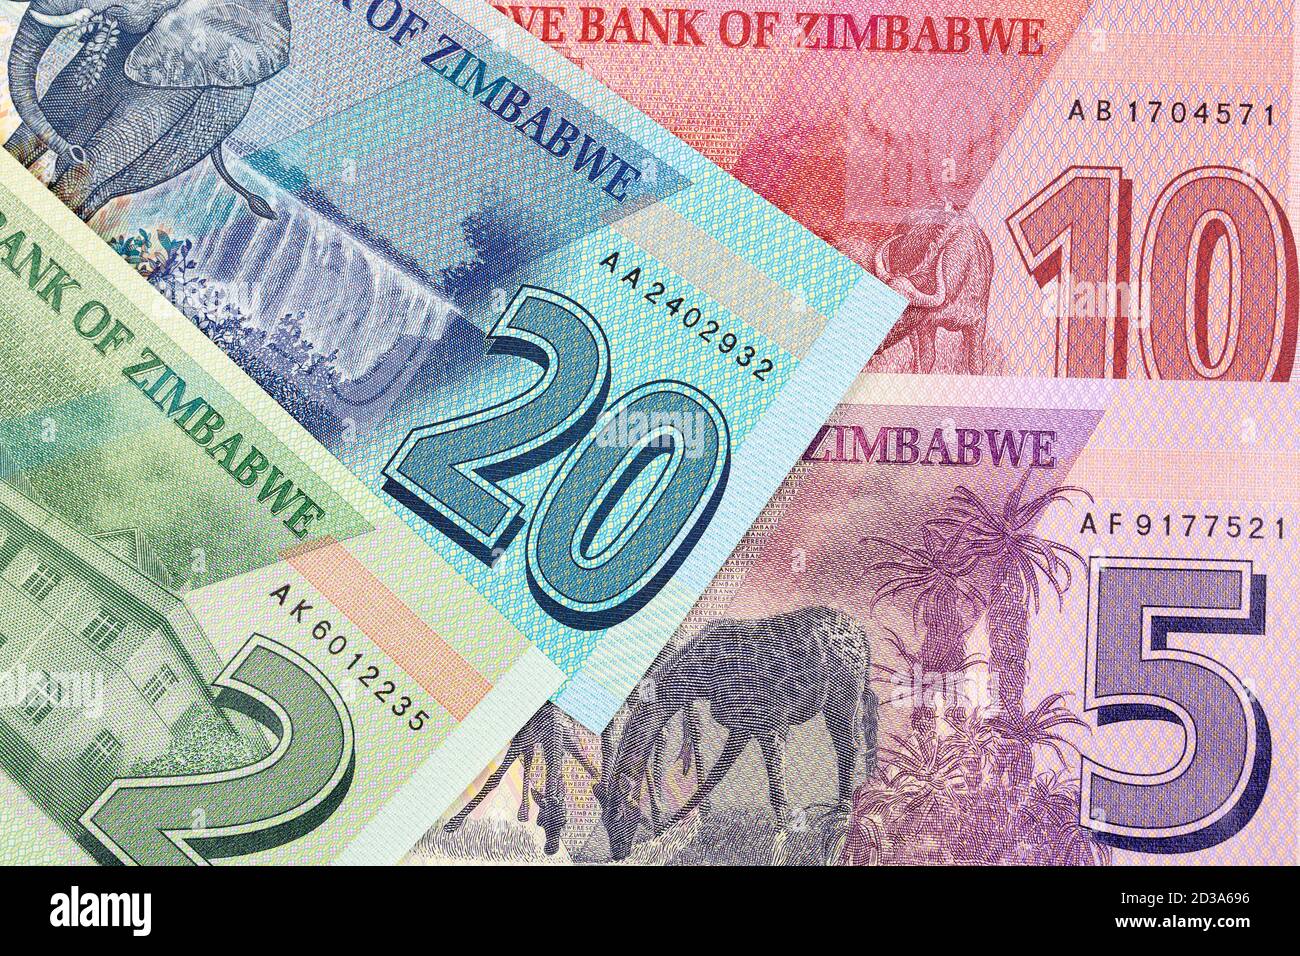 Zimbabwean money - New serie of banknotes Stock Photo